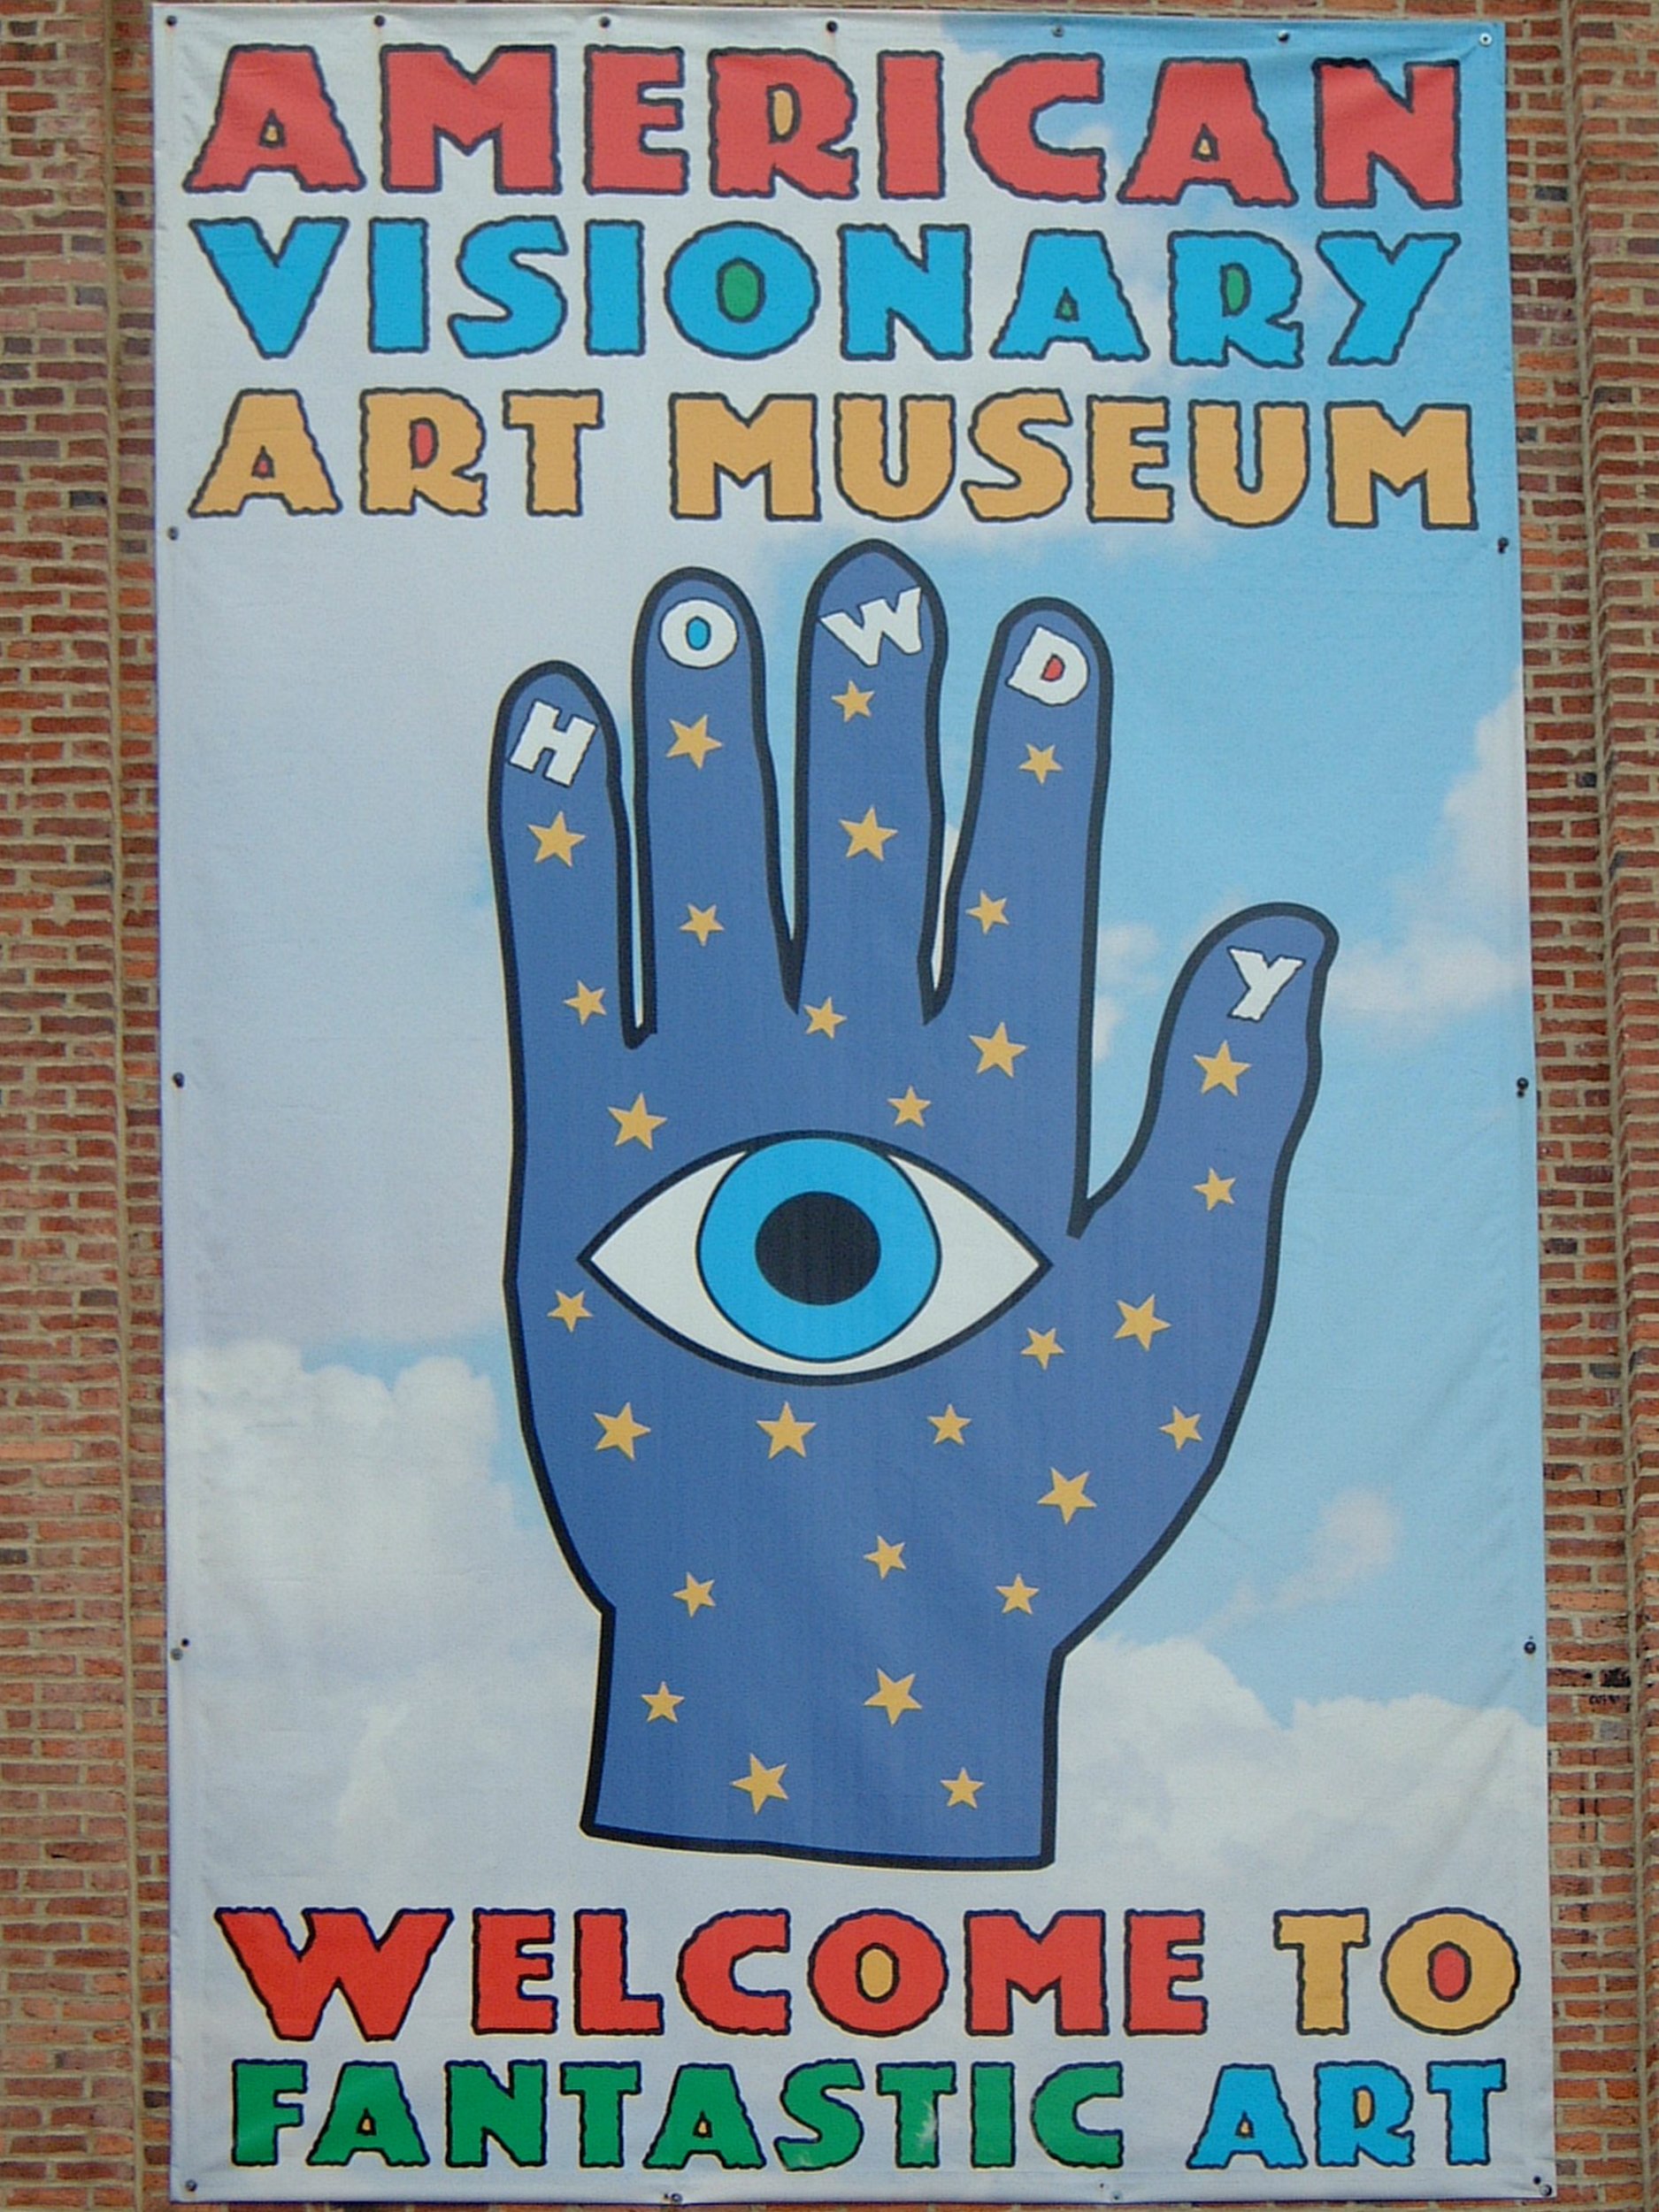 American Visionary Art Museum (AVAM)